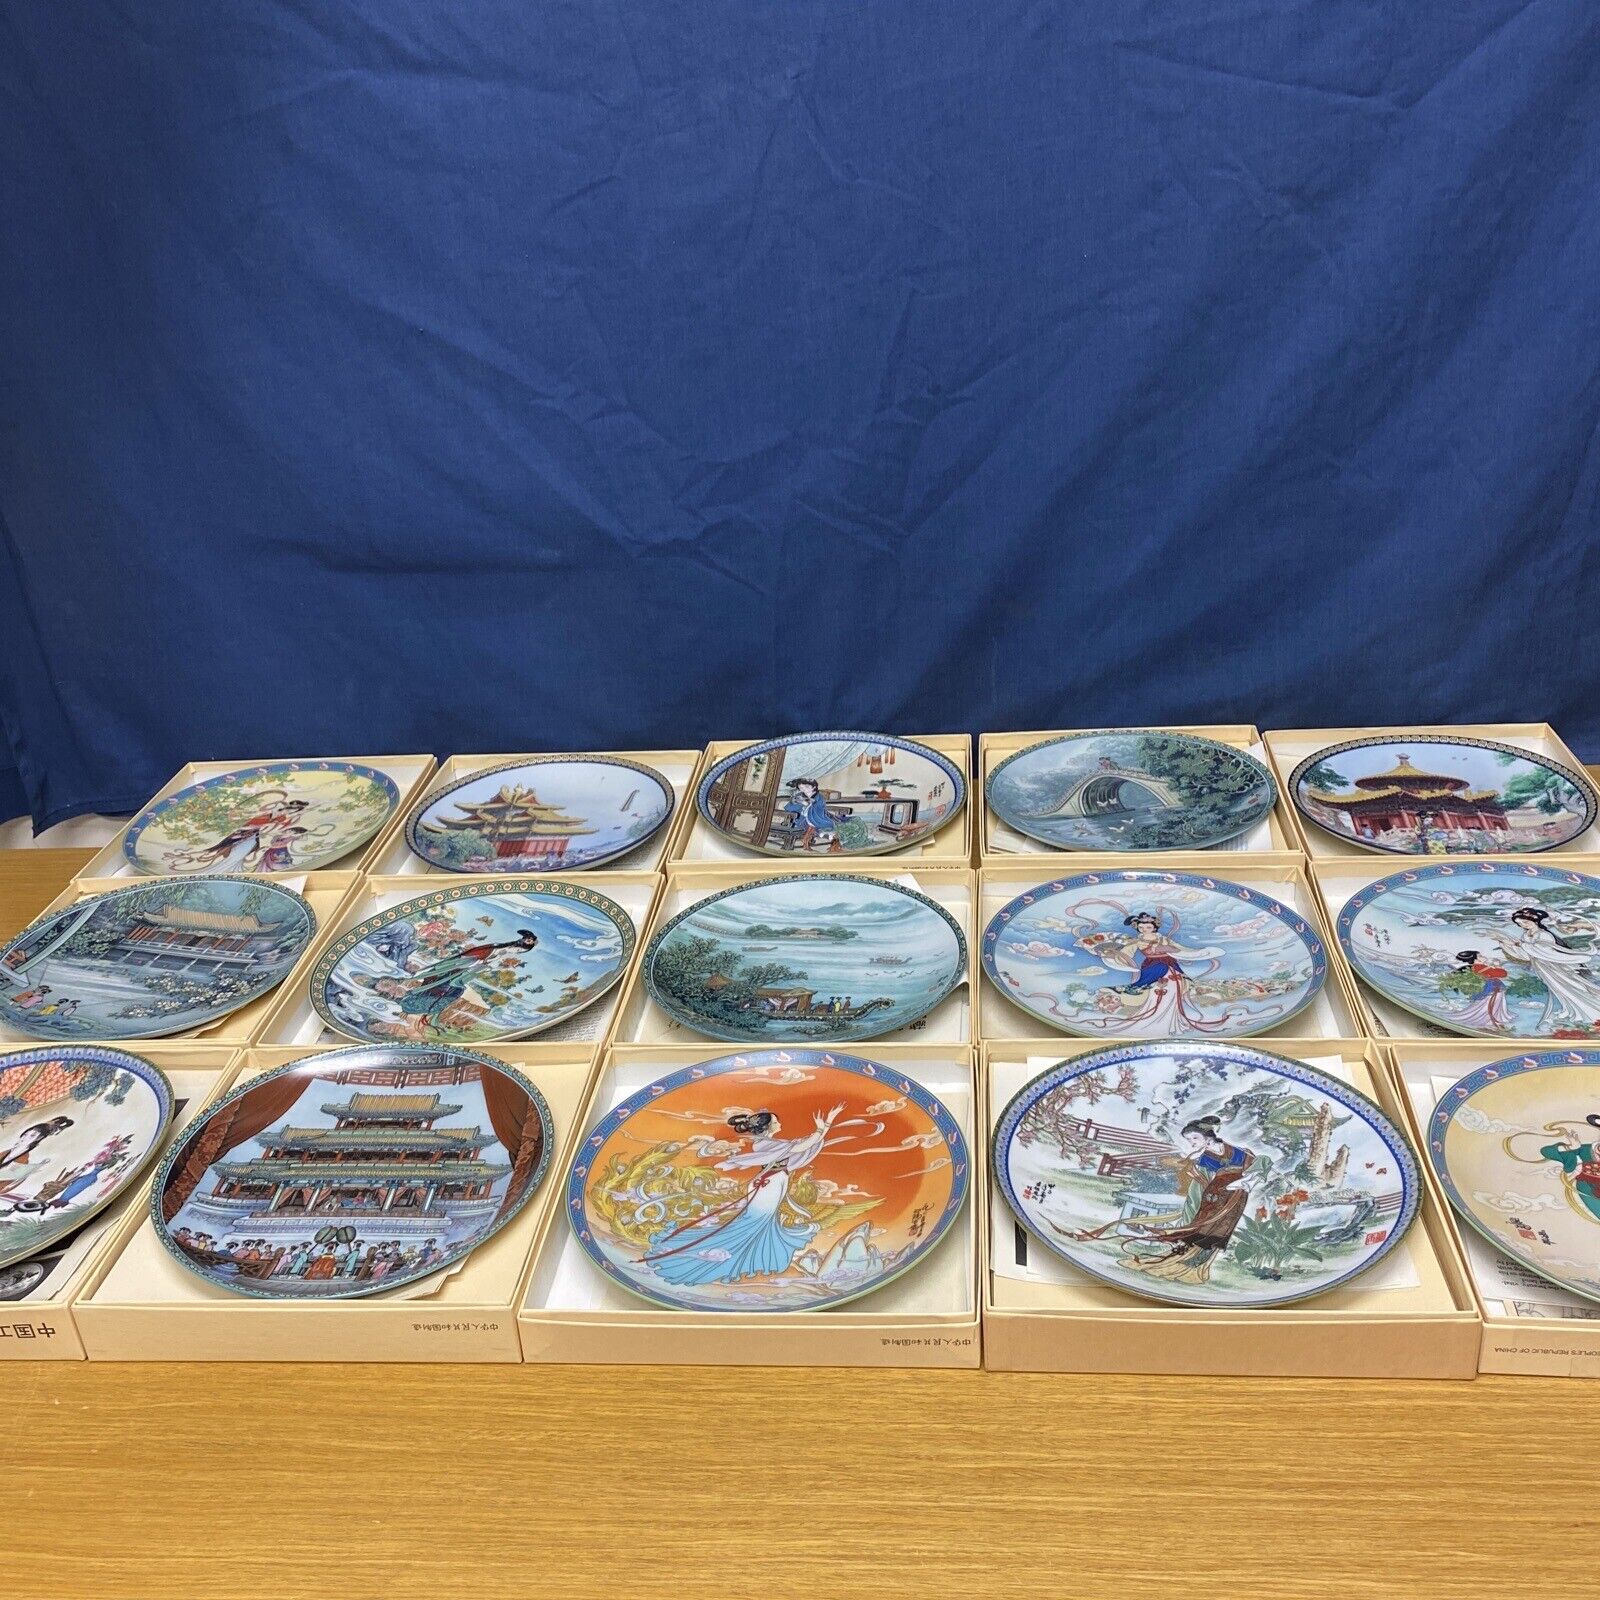 15 Imperial Jingdezhen Porcelain Collectors Plates w/Org. Boxes & Papers (4428)